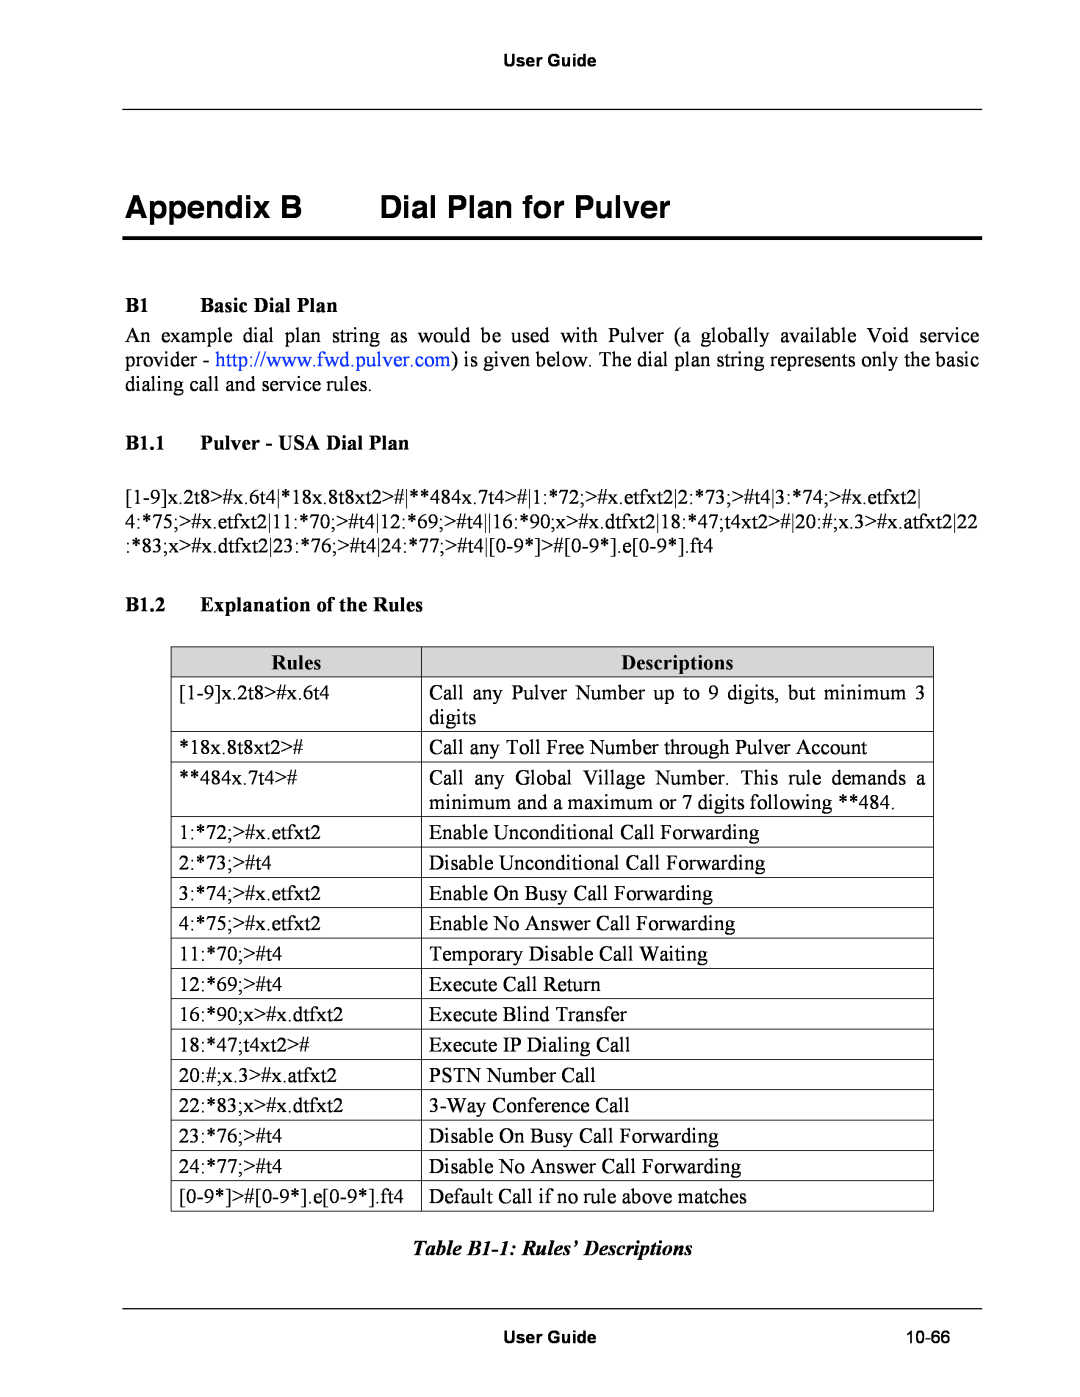 Netopia Network Adapater manual Appendix B Dial Plan for Pulver, B1 Basic Dial Plan, B1.1 Pulver - USA Dial Plan, Rules 